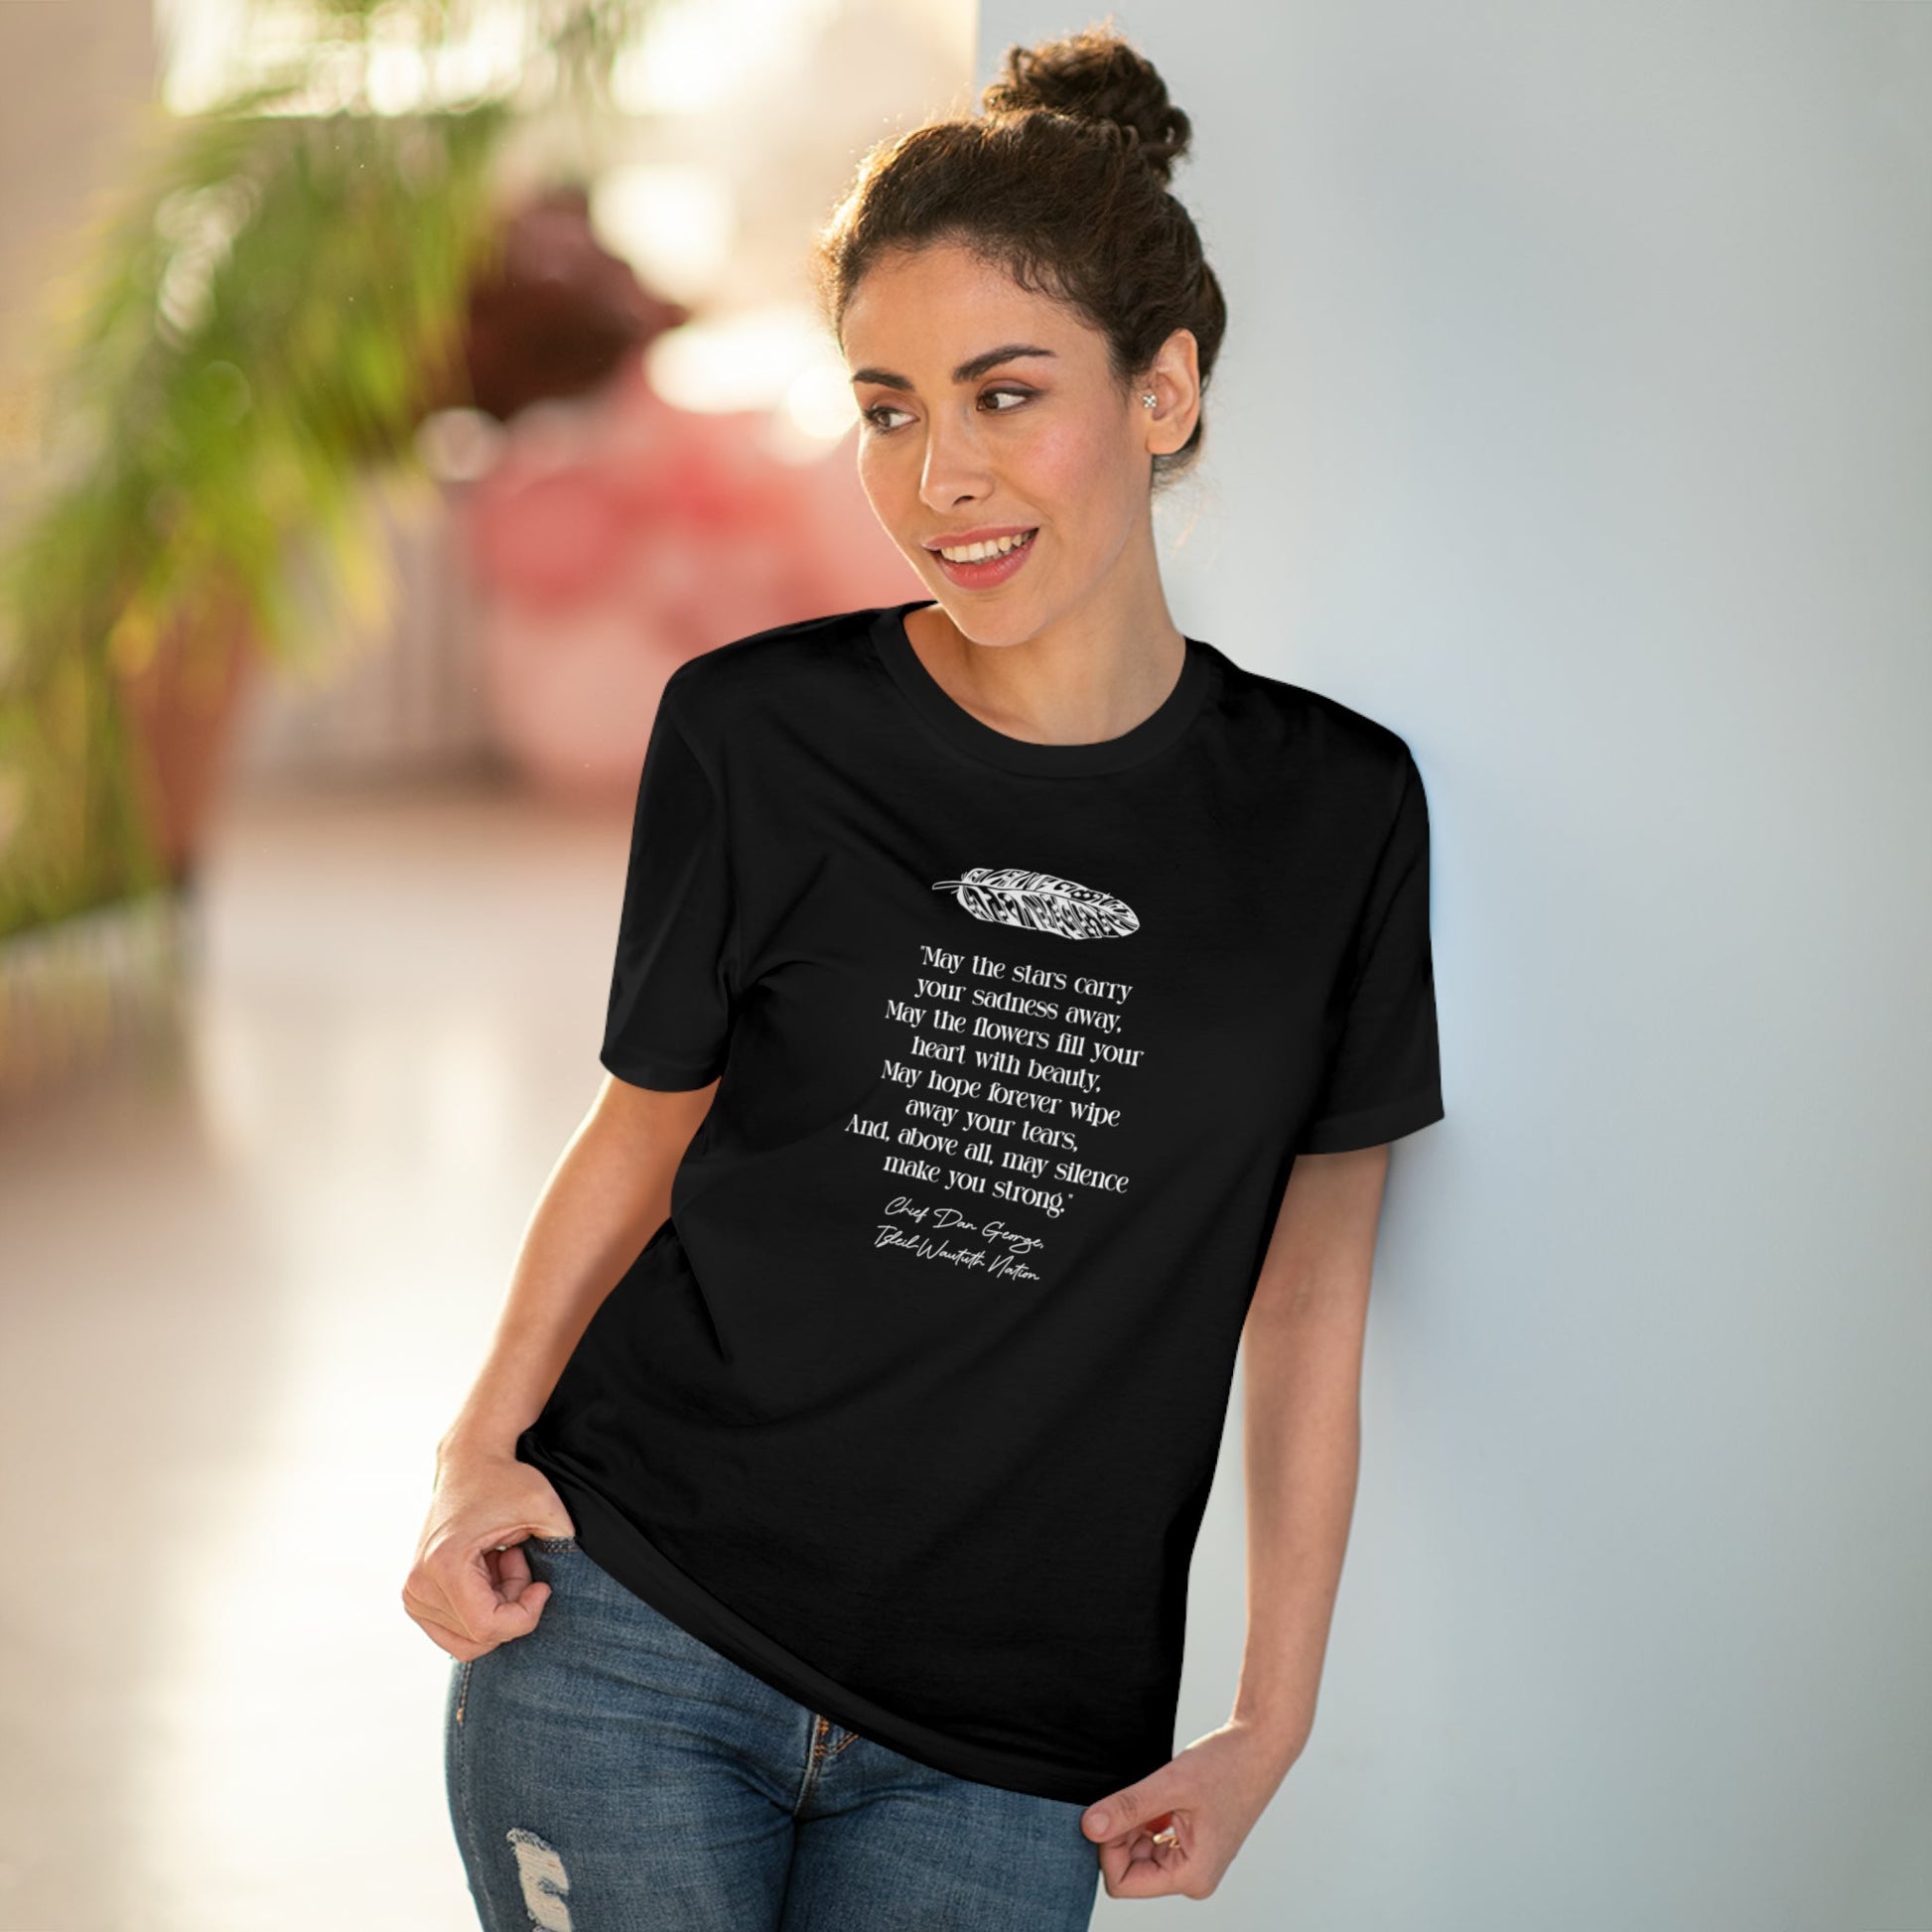 Urban 'Native American Prayer' Organic Cotton T-shirt - Famous Quote Tee